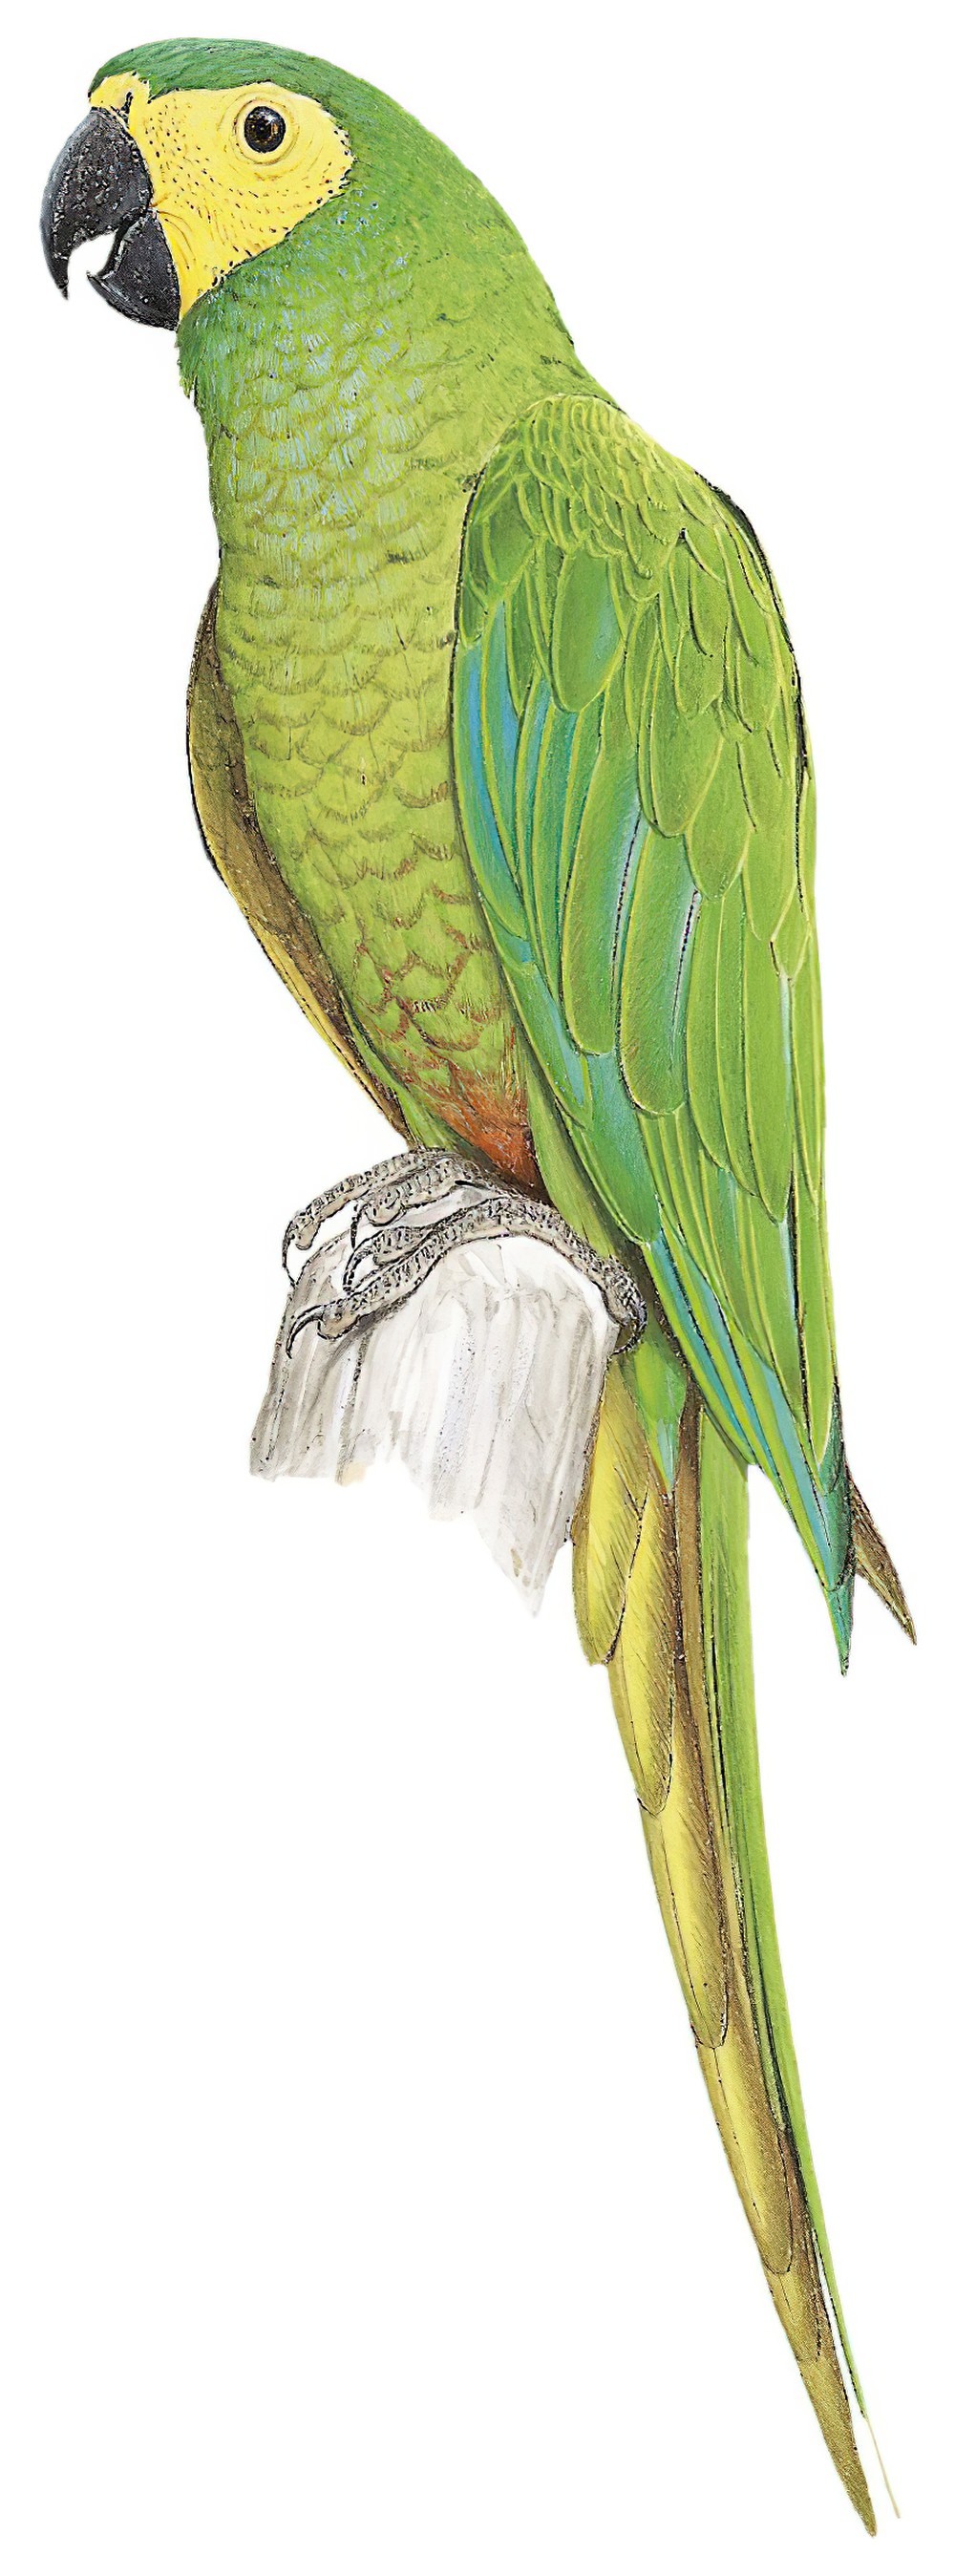 Red-bellied Macaw / Orthopsittaca manilatus